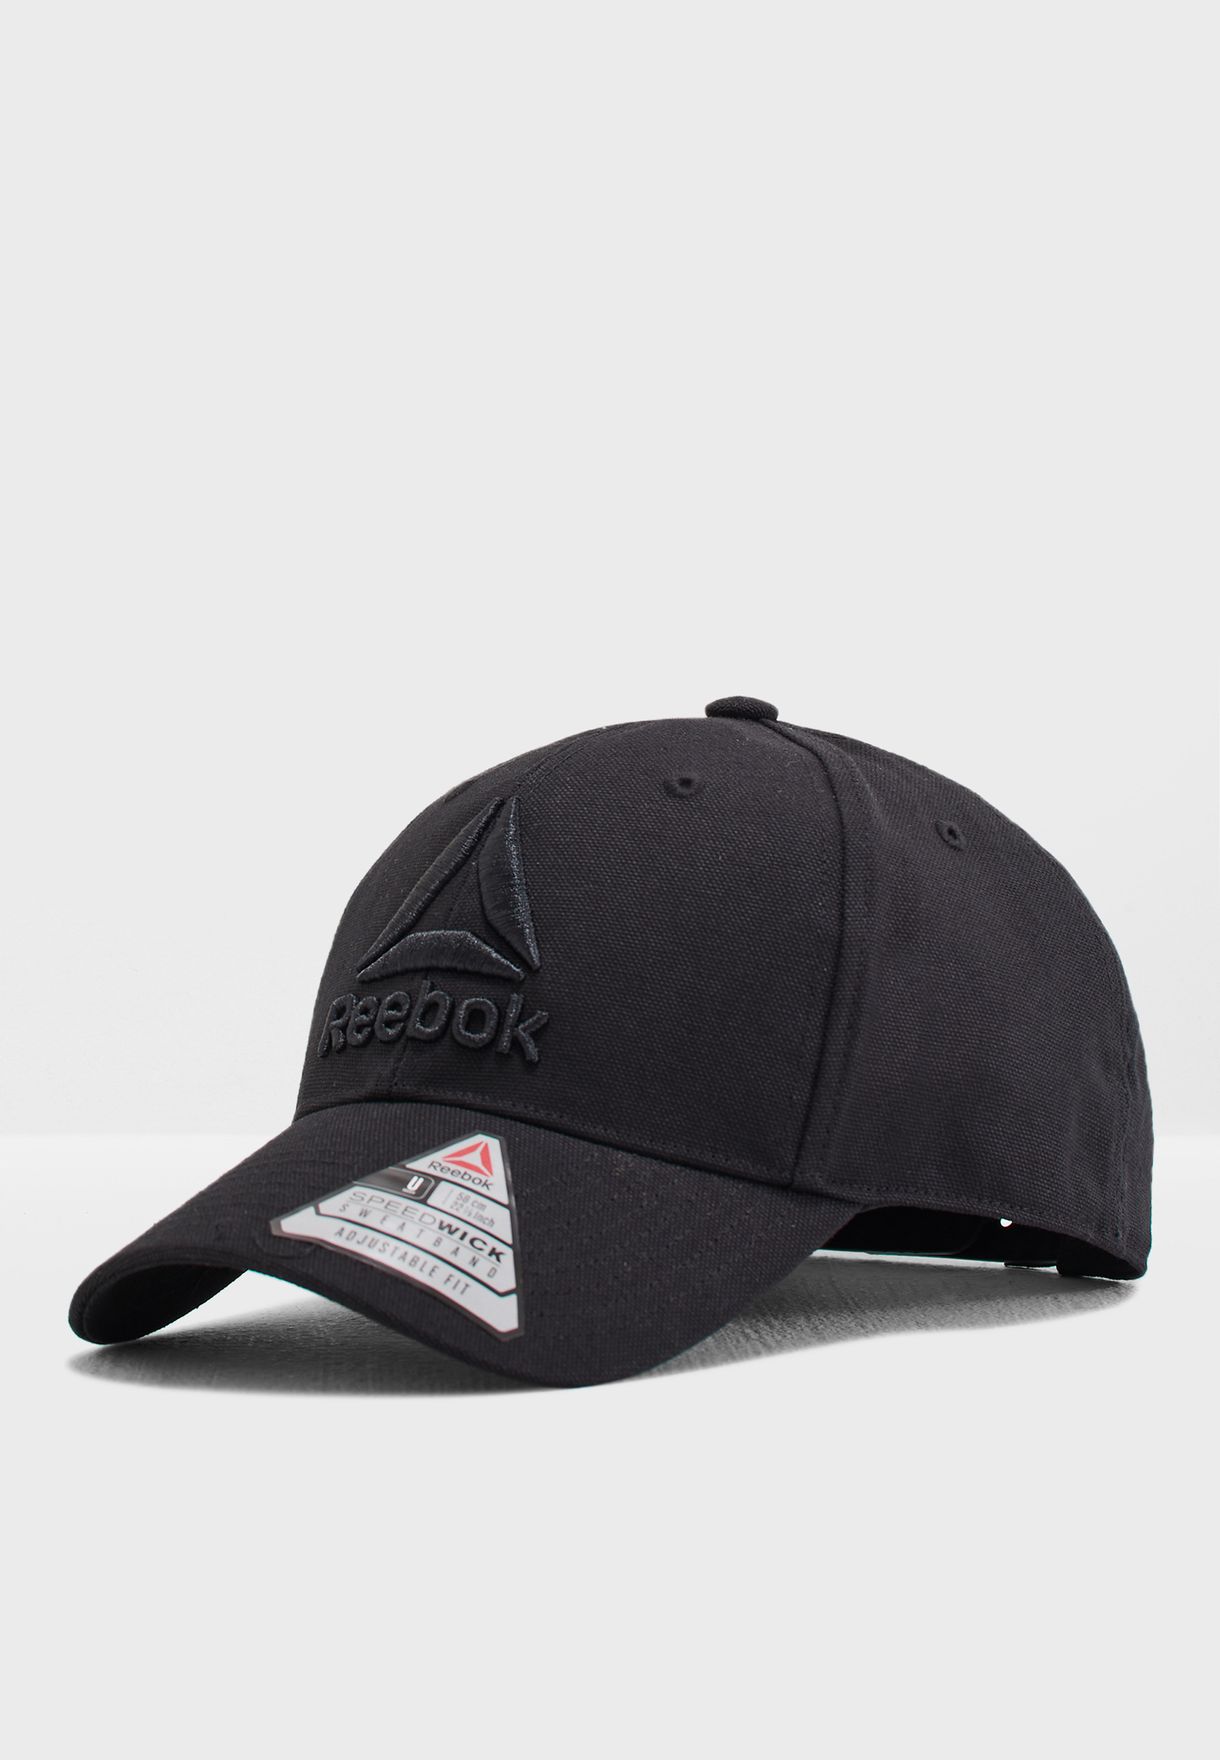 reebok black hat